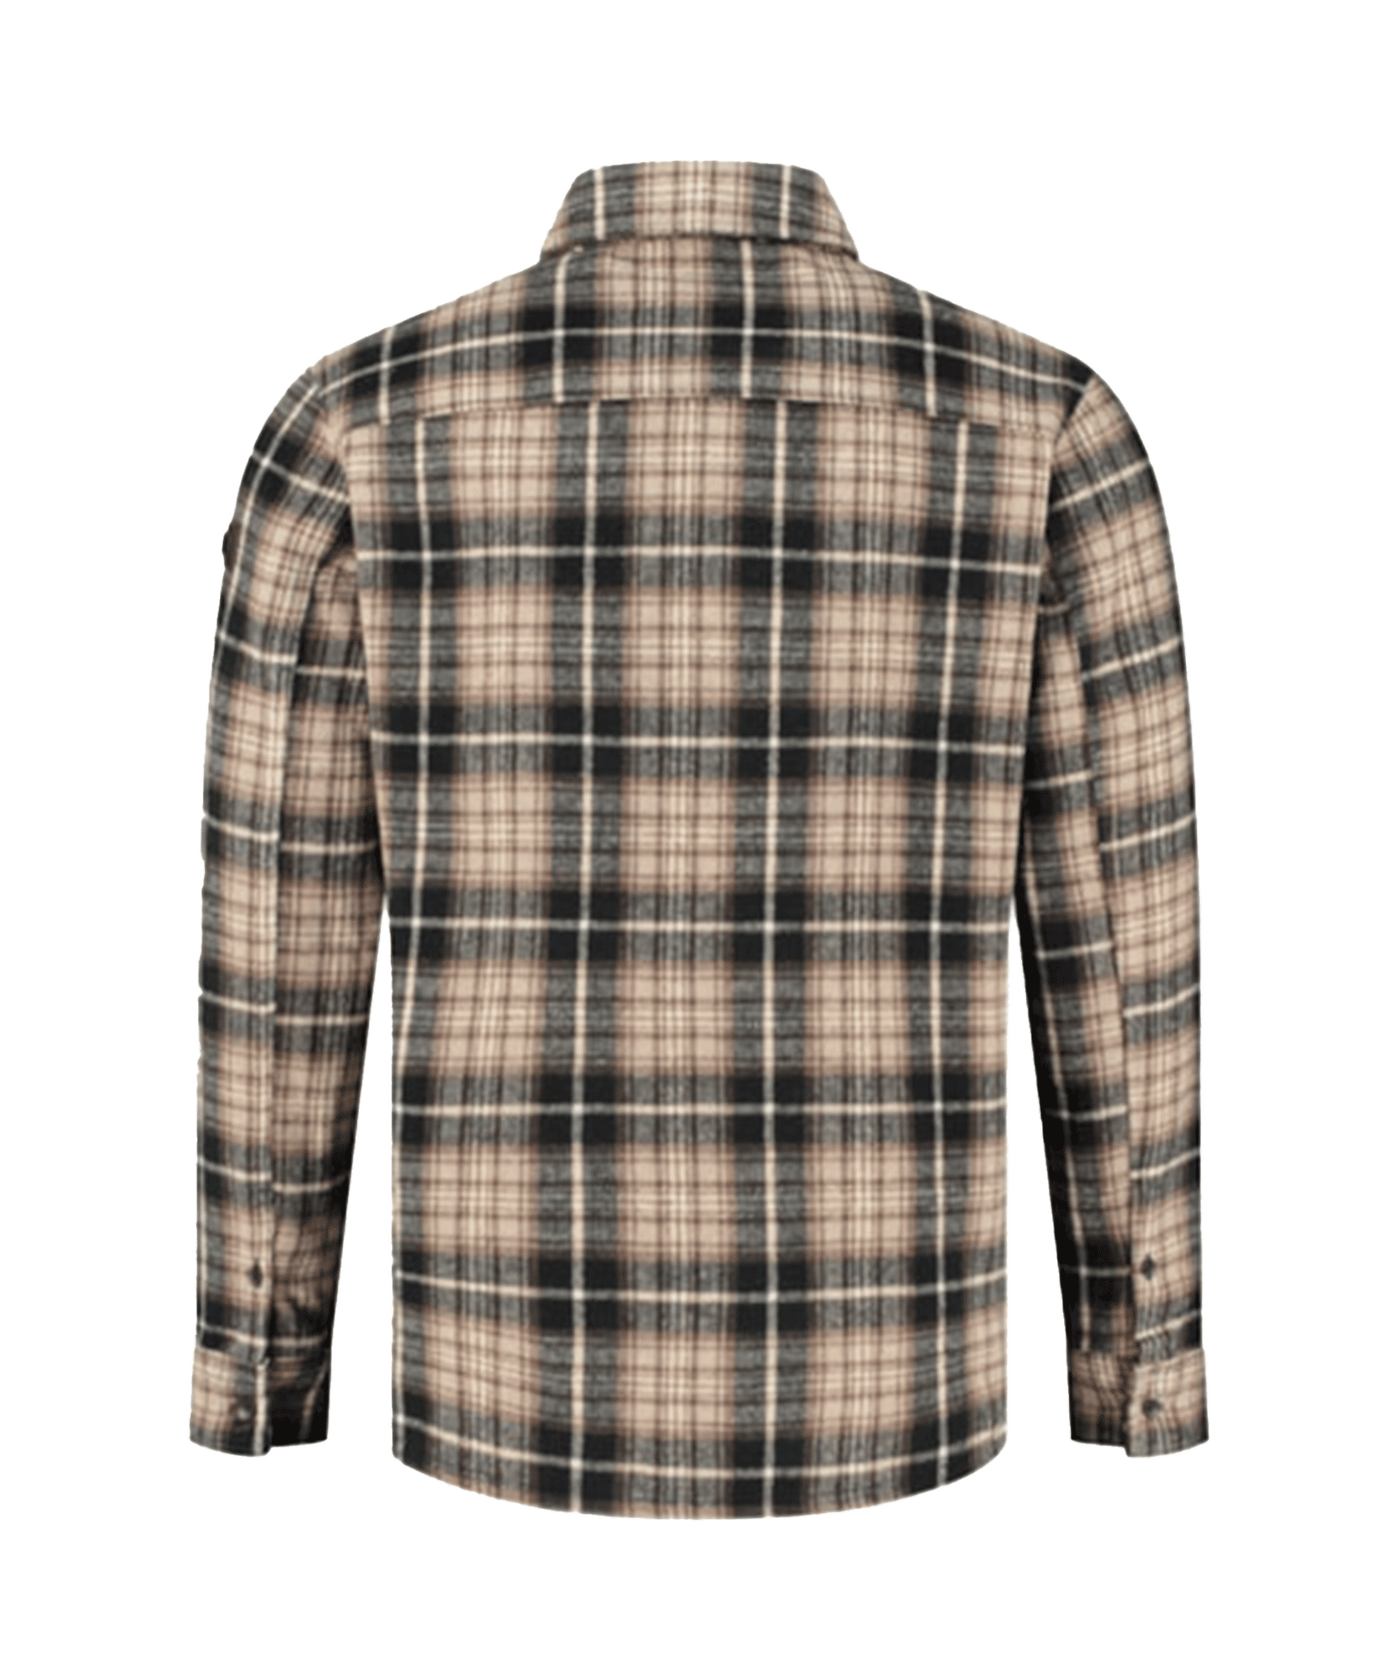 PureWhite - 23030207 - Wool Look Check Overshirt - Brown